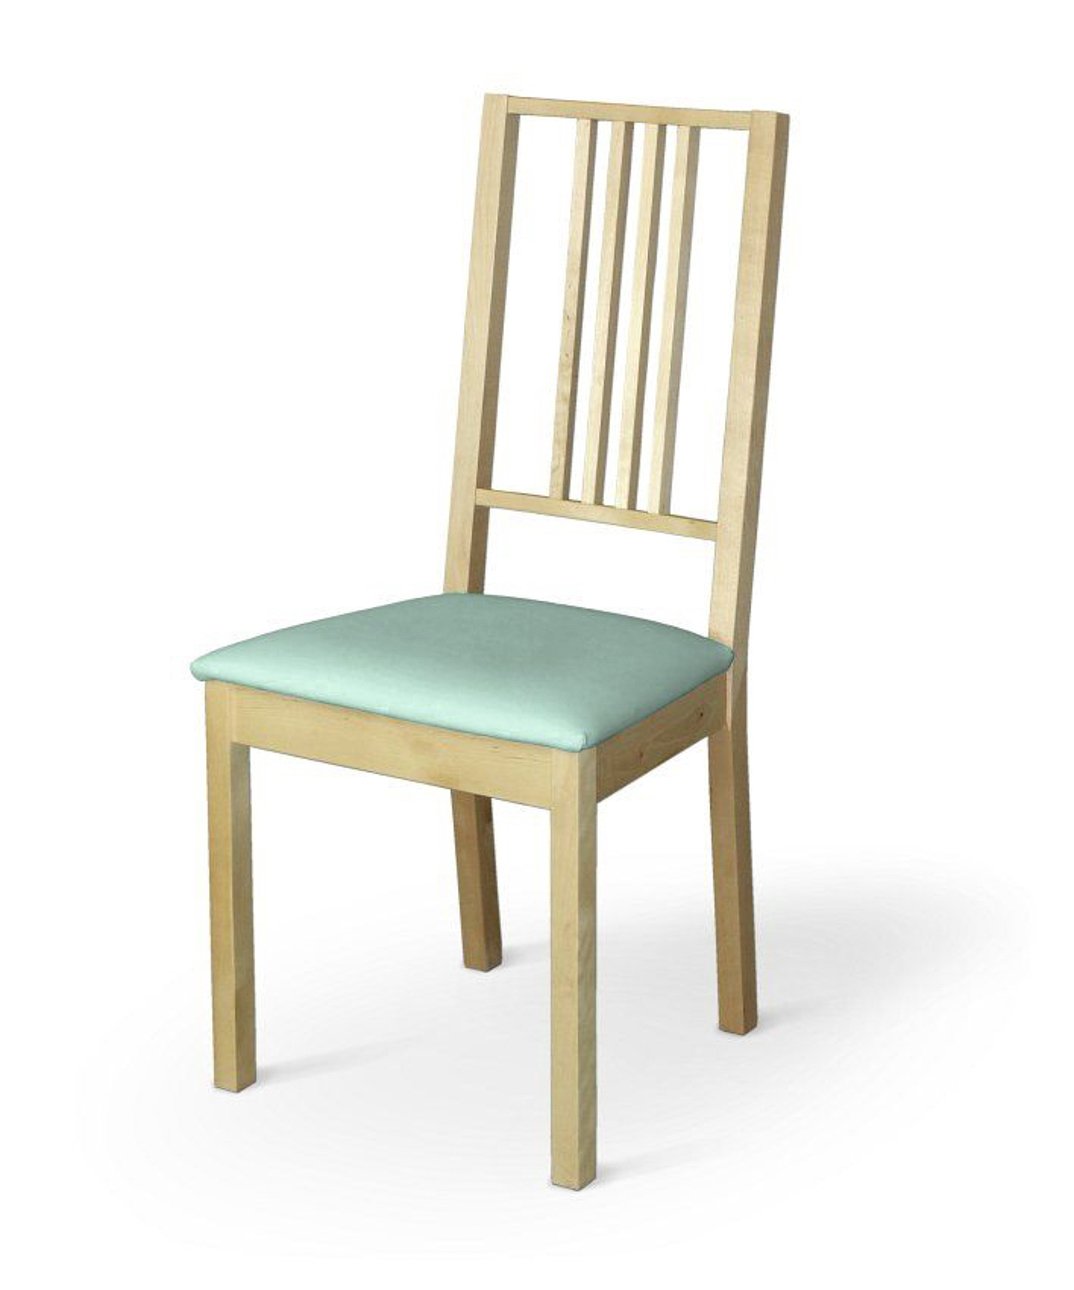 Dekoria Potah na sedák židle Börje, mátová, potah sedák židle Börje, Loneta, 133-37